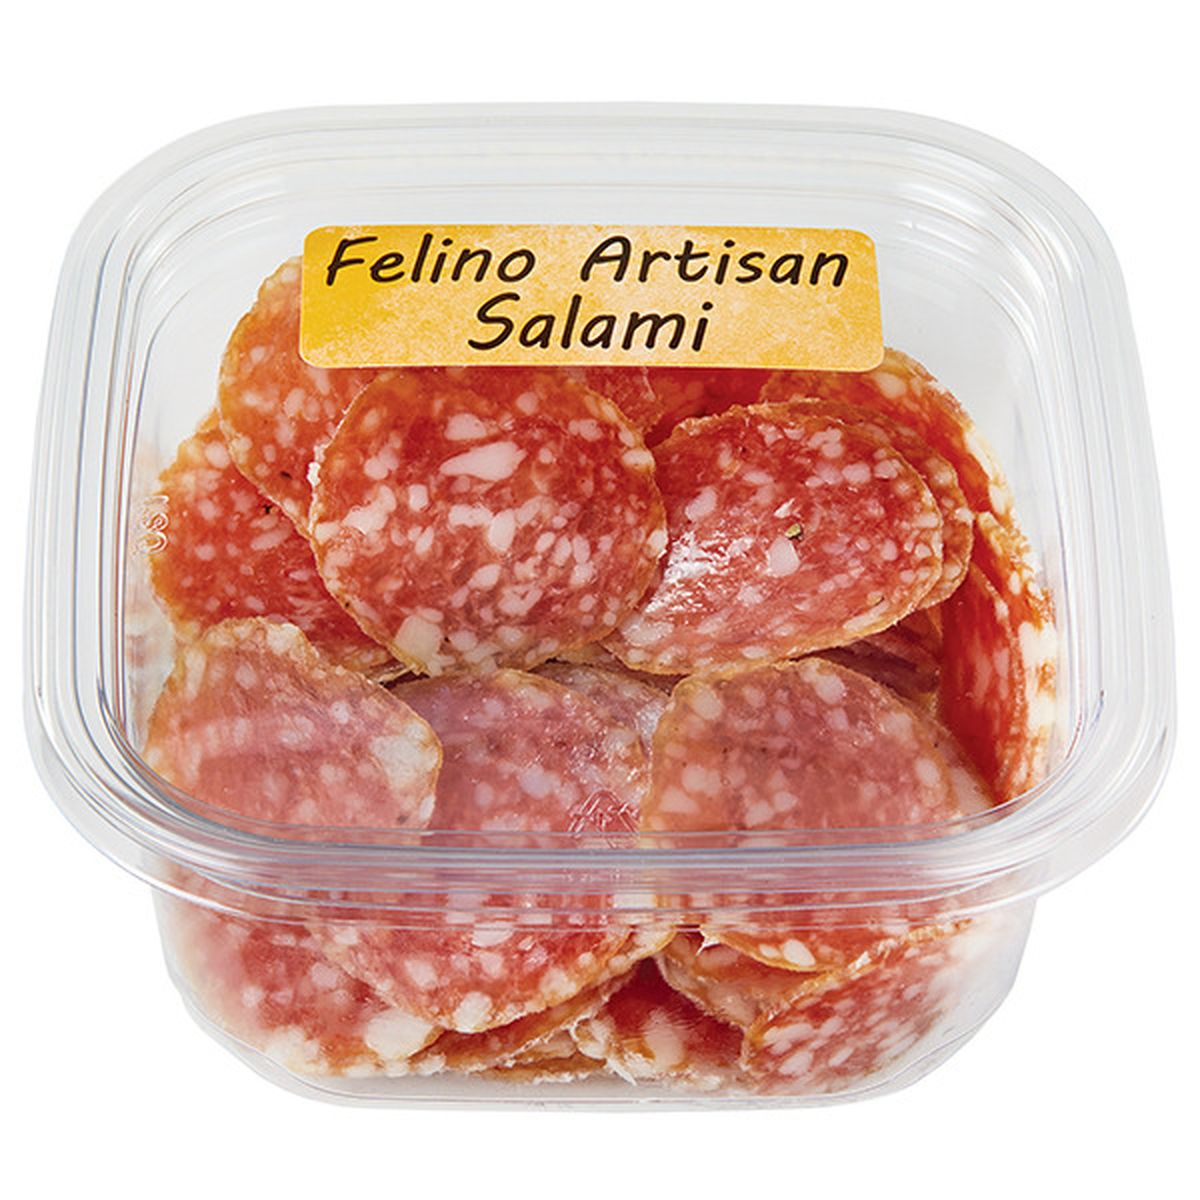 Calories in Felino Artisan Salami